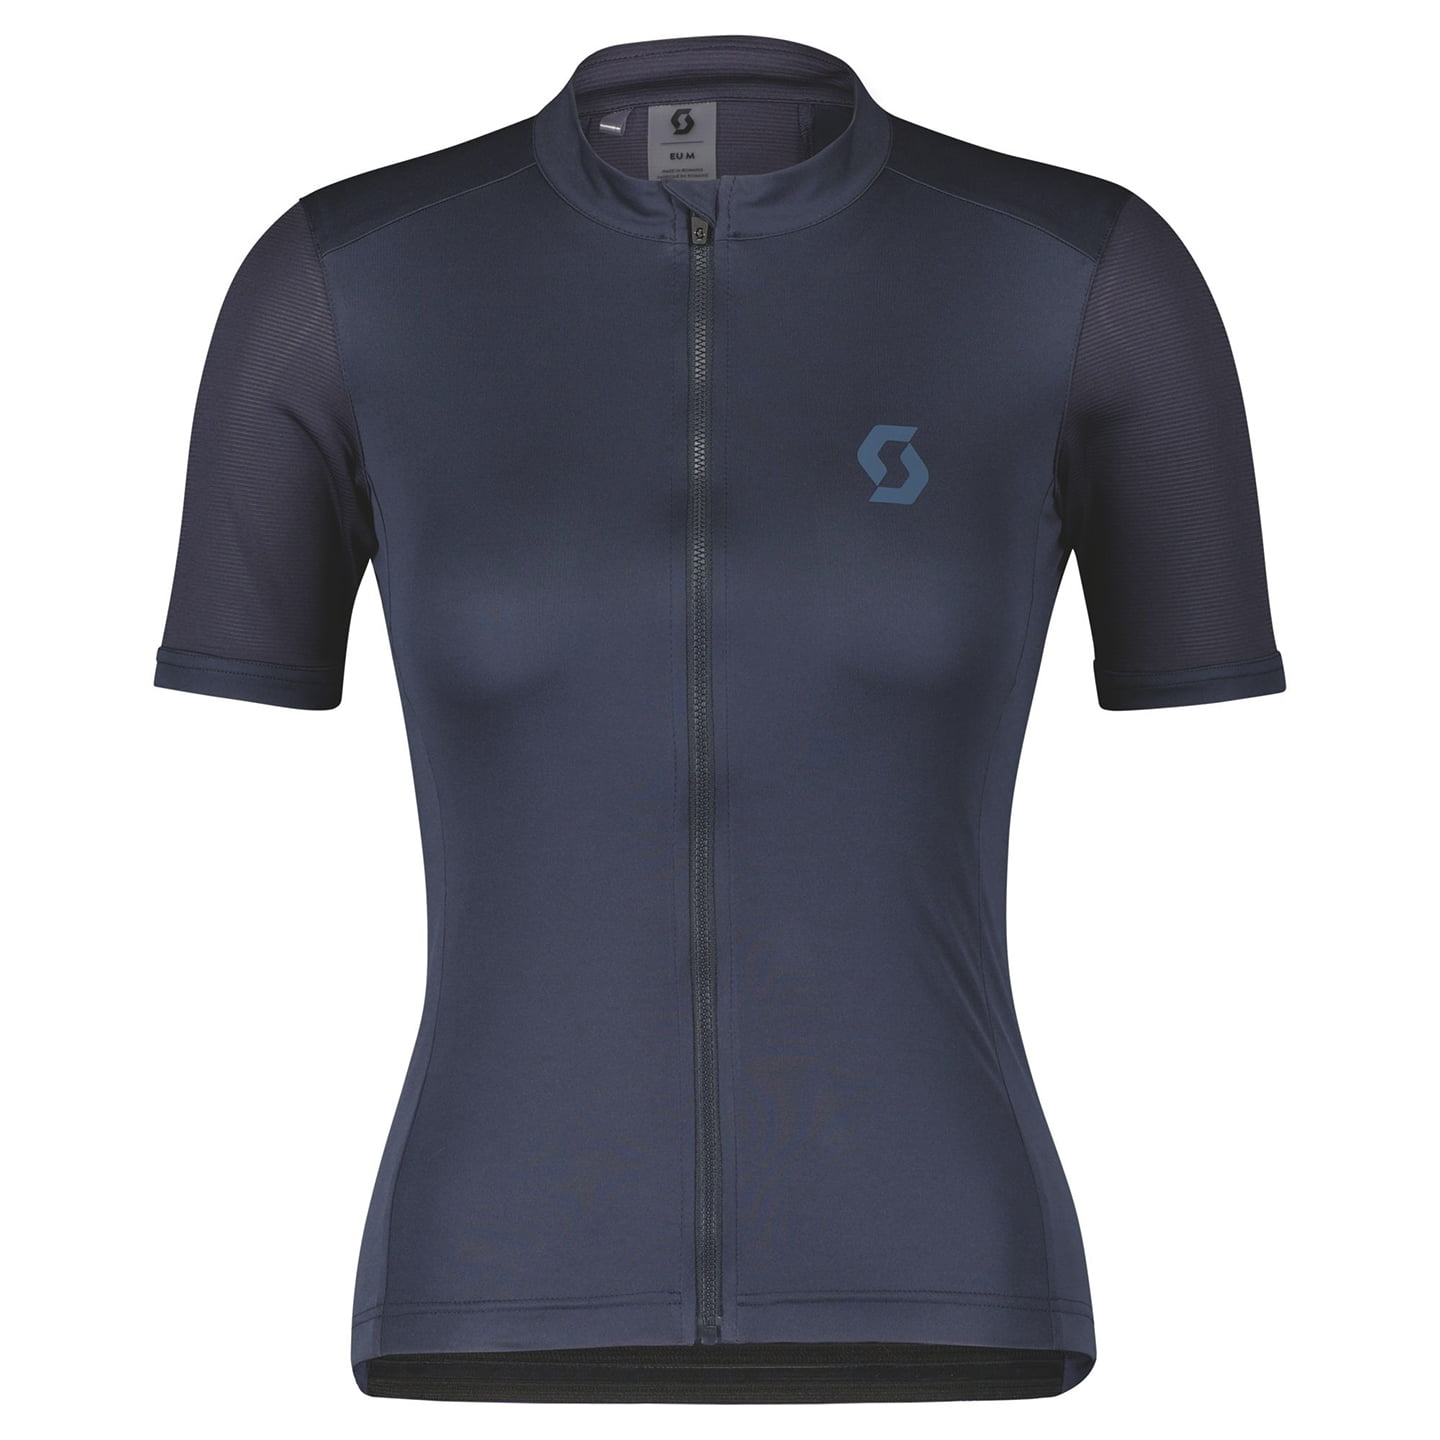 SCOTT Endurance 10 Women’s Jersey Women’s Short Sleeve Jersey, size XL, Cycle jersey, Bike gear